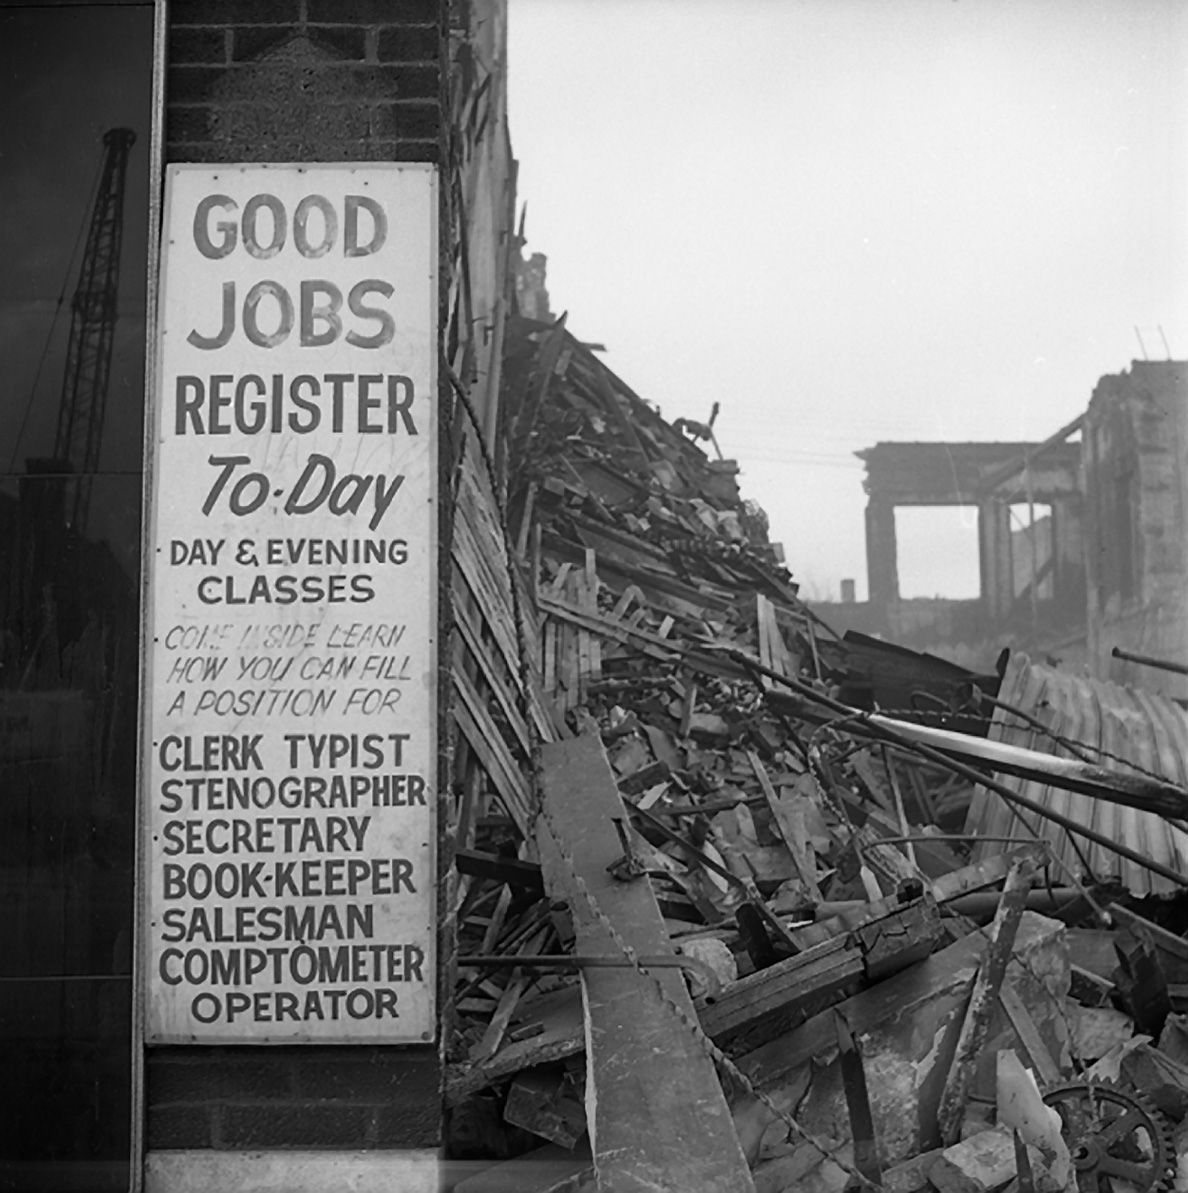 Vivian Maier, "Good Jobs" Sign, Demolition Site, Chicago, 1968